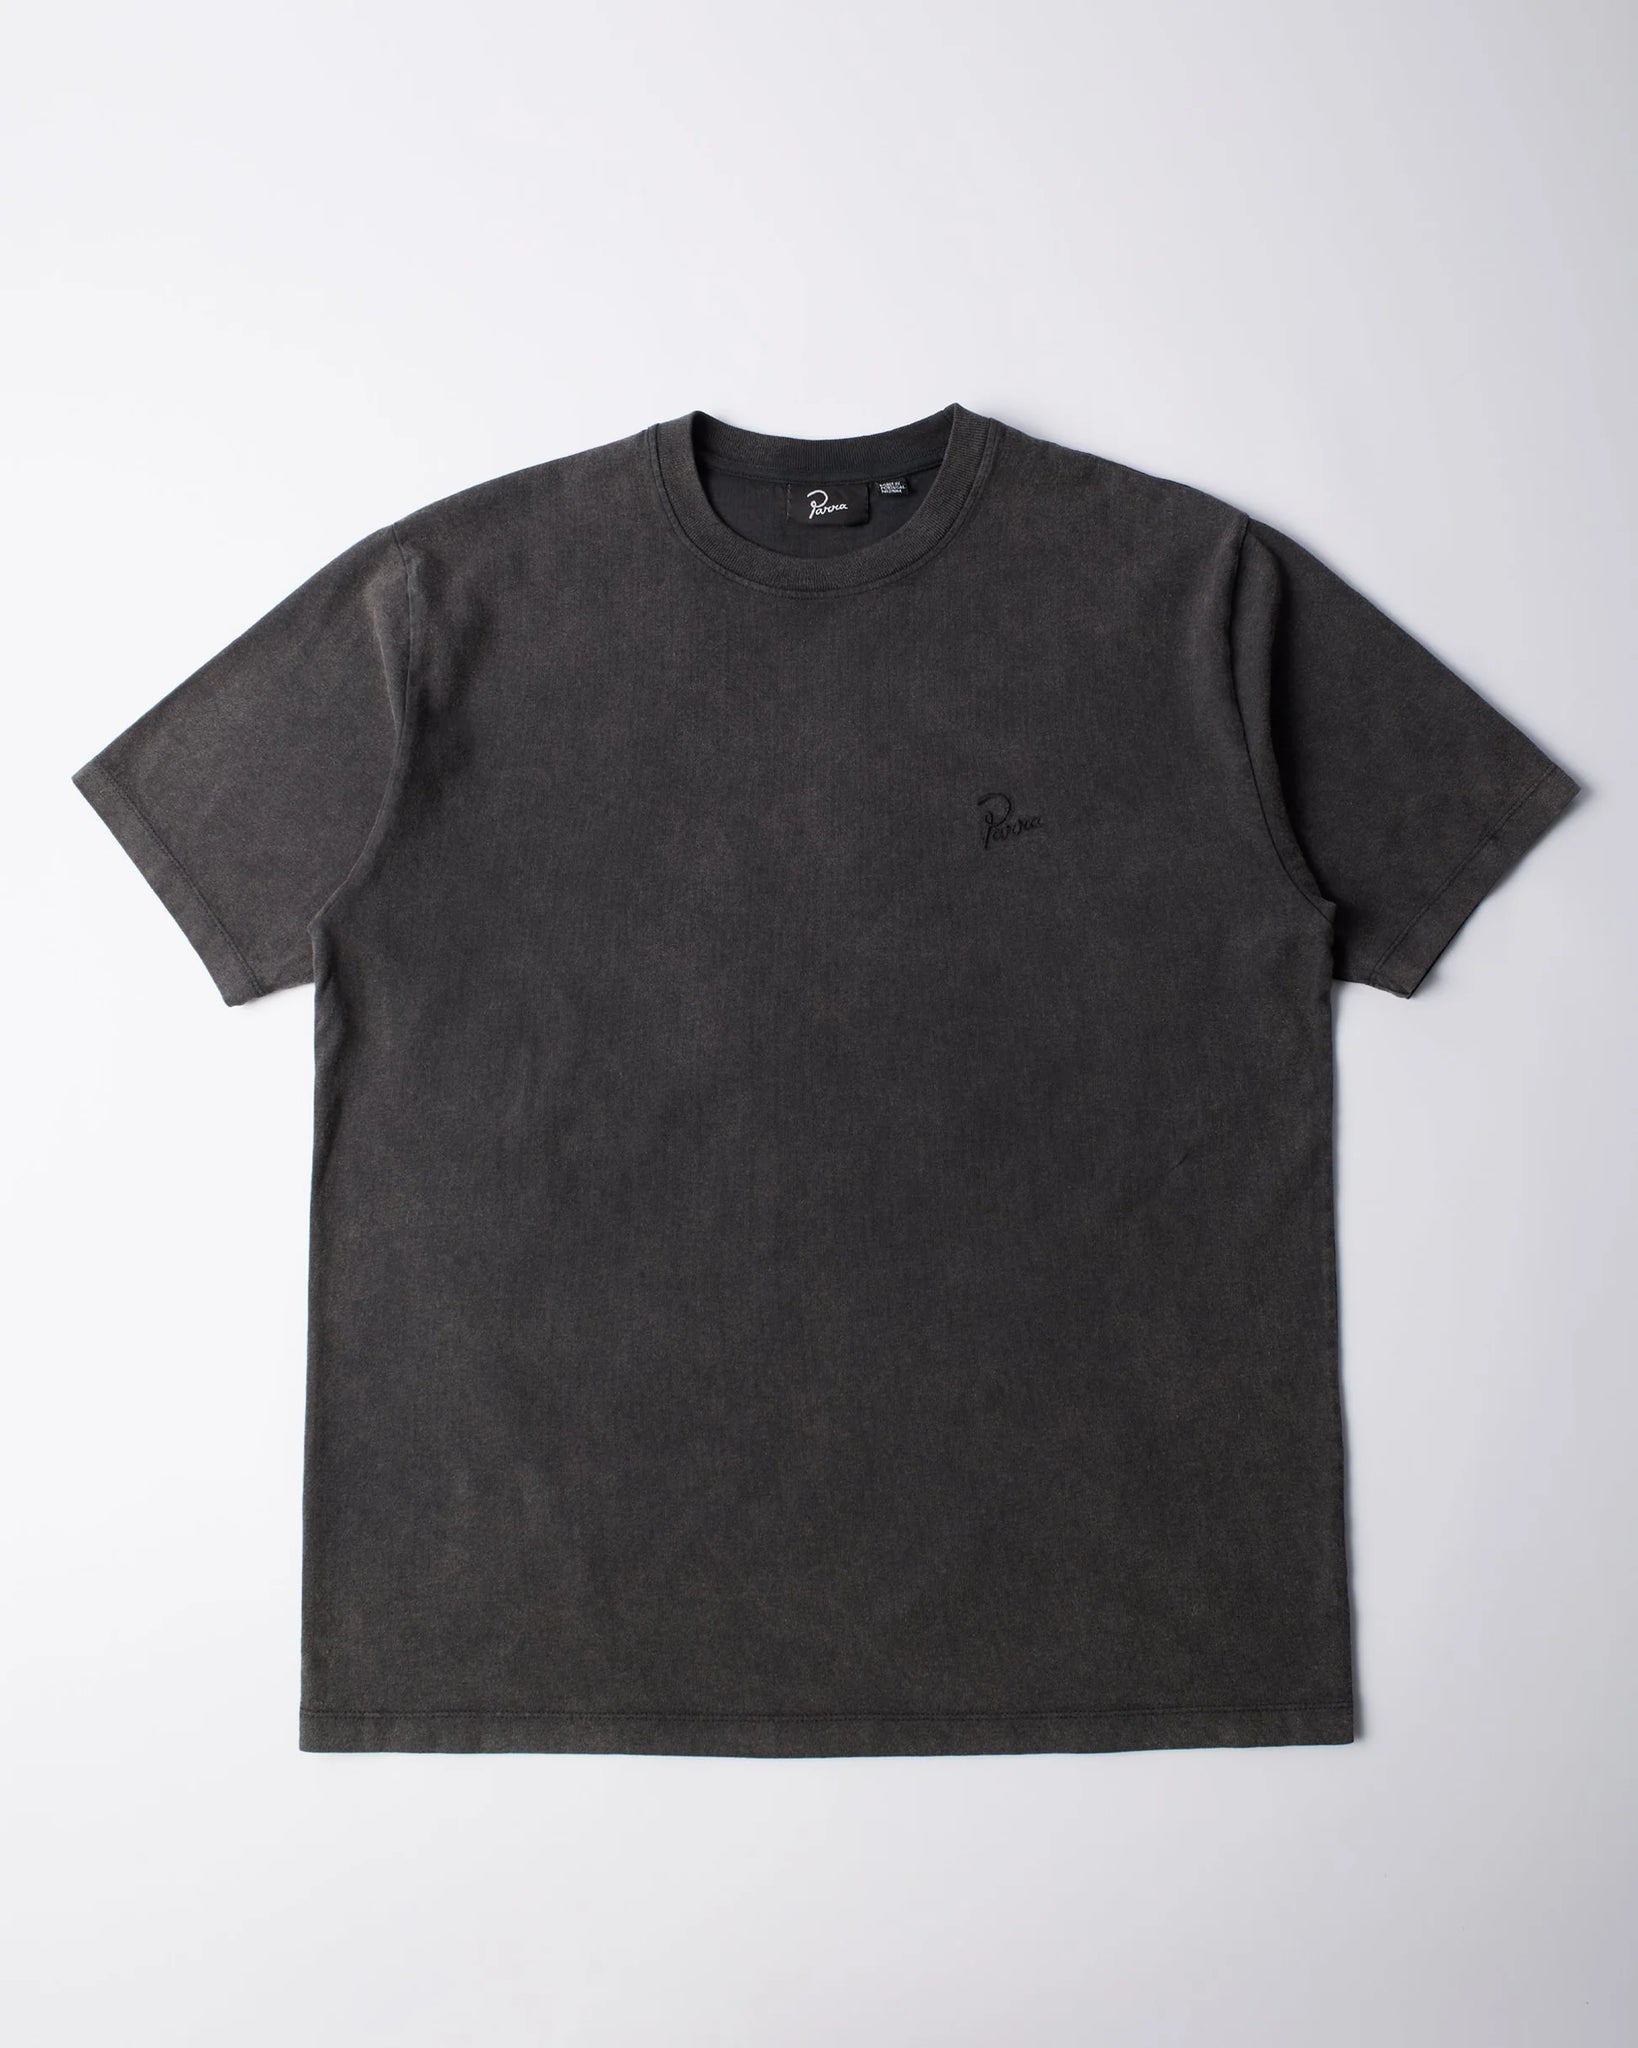 Parra Script logo t-shirt (washed black)